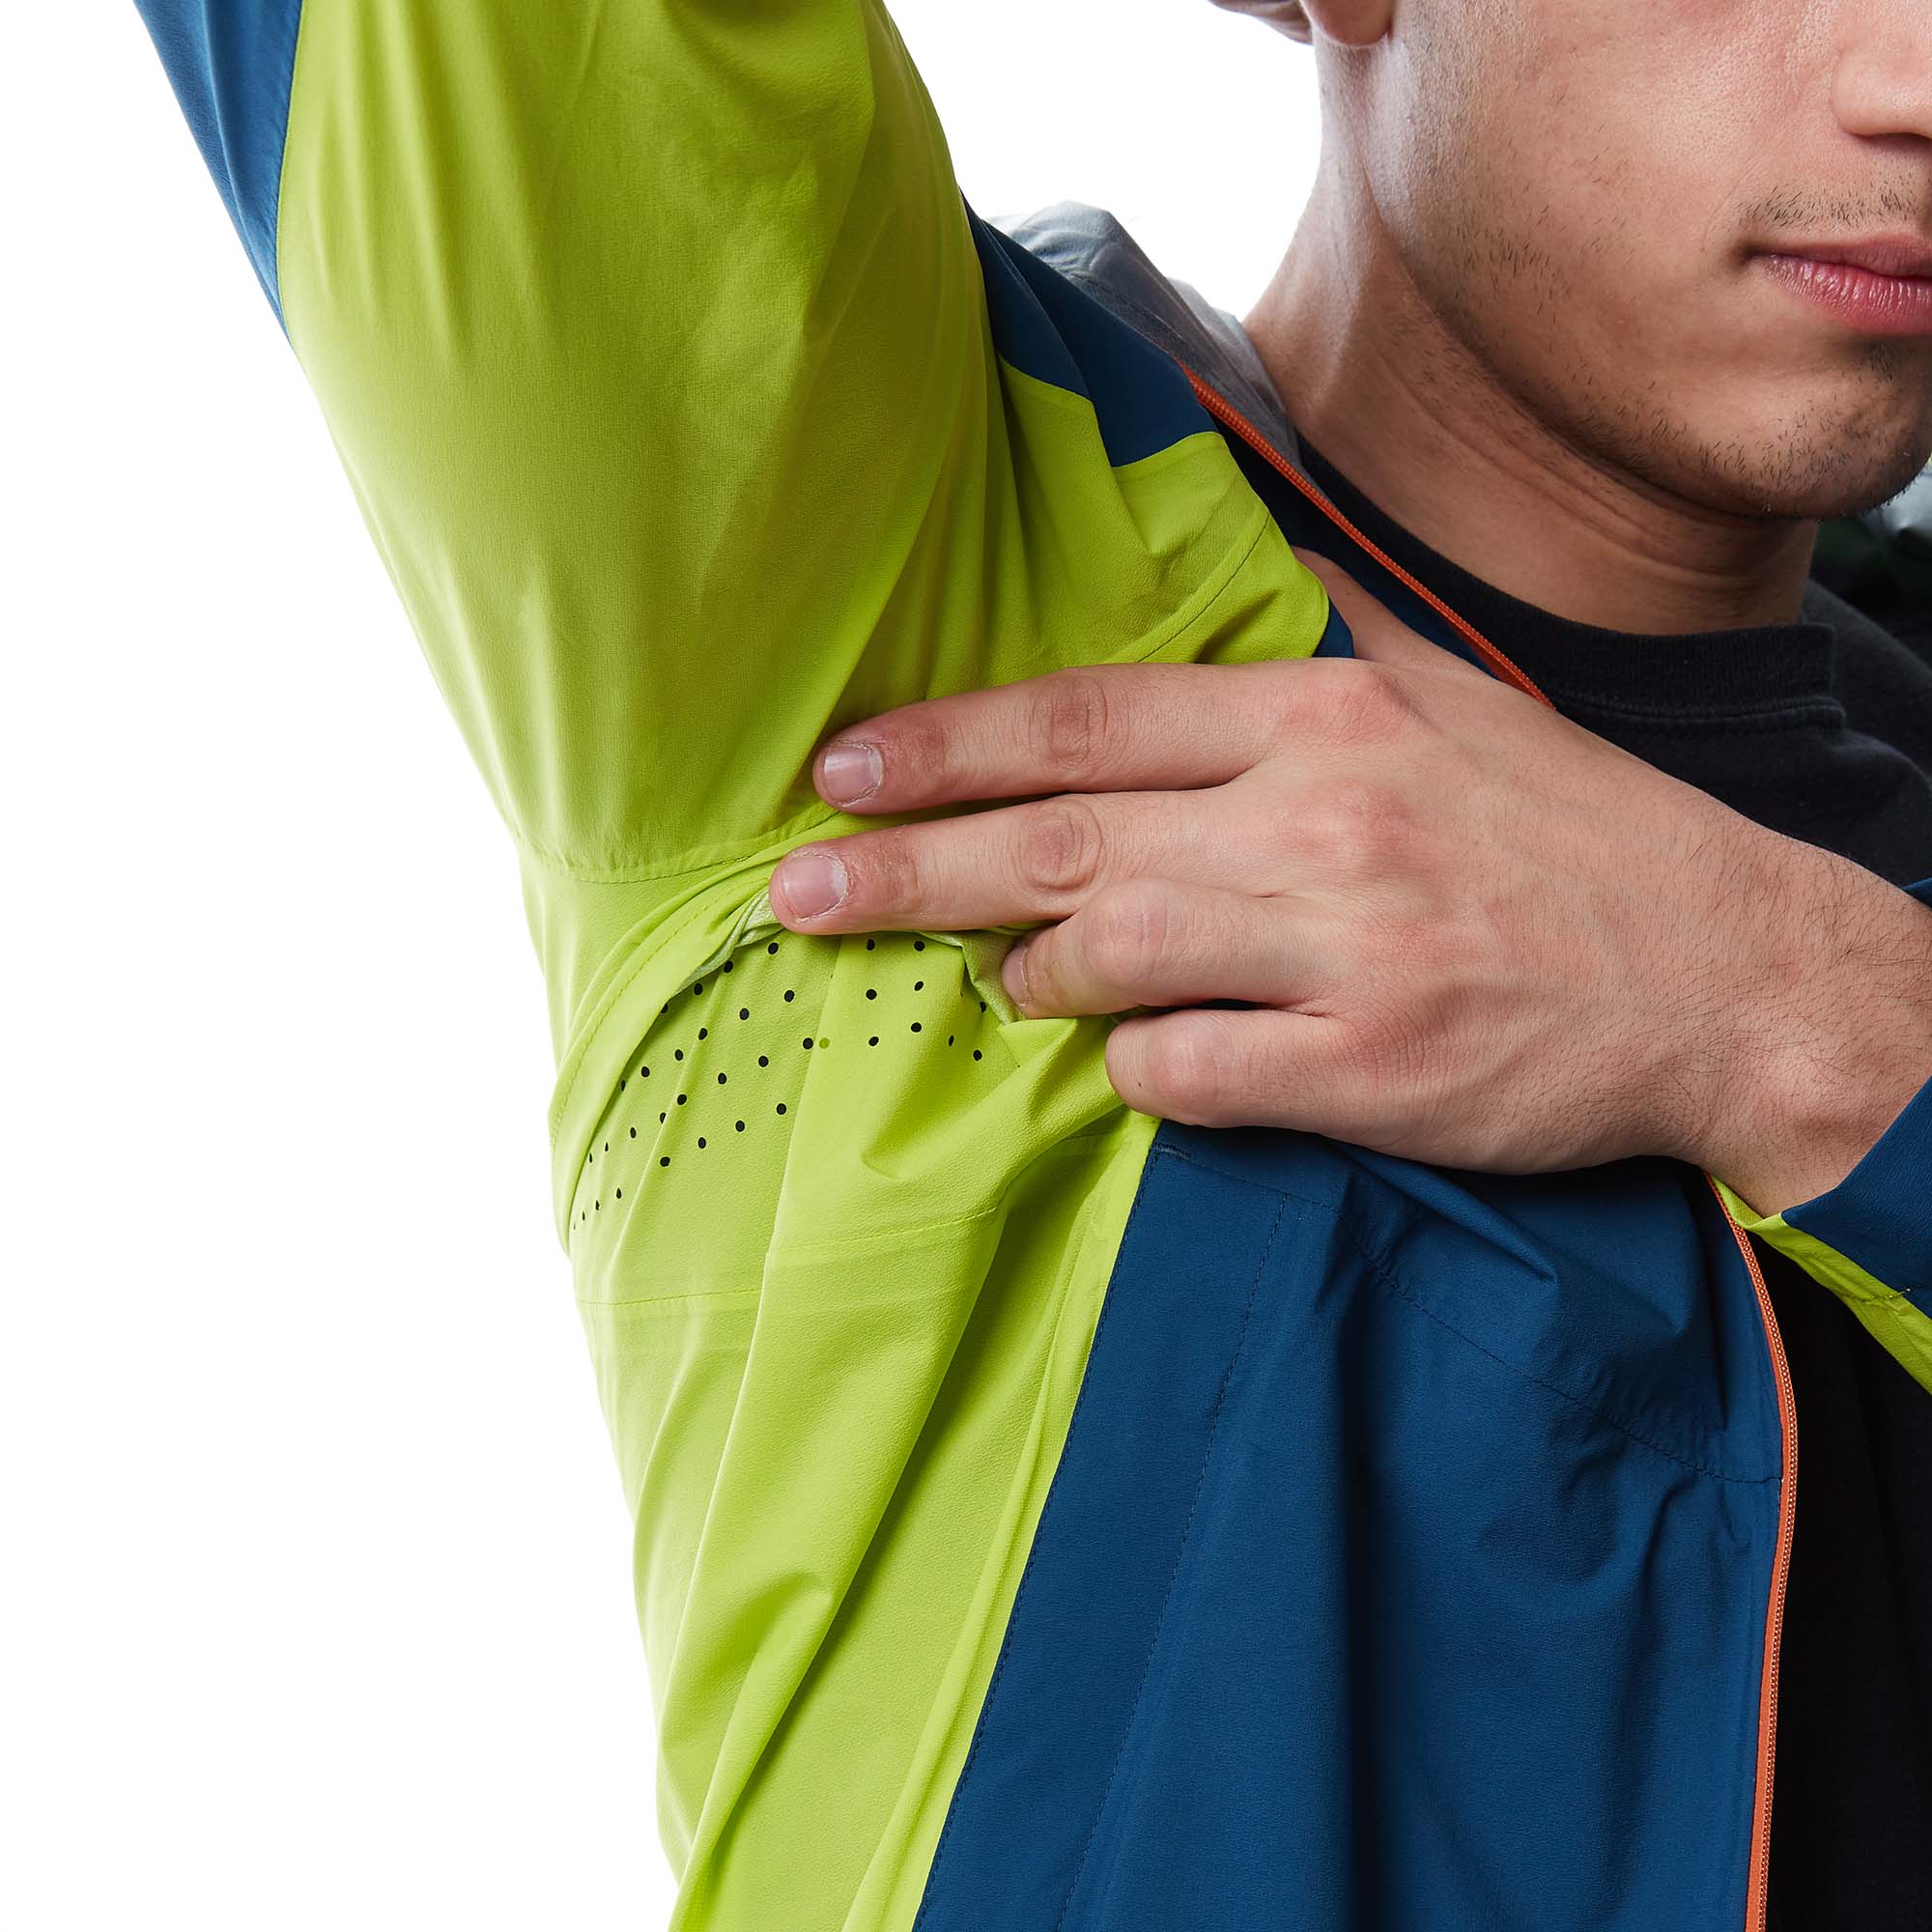 La Sportiva Discover Hooded  Performance Jacket